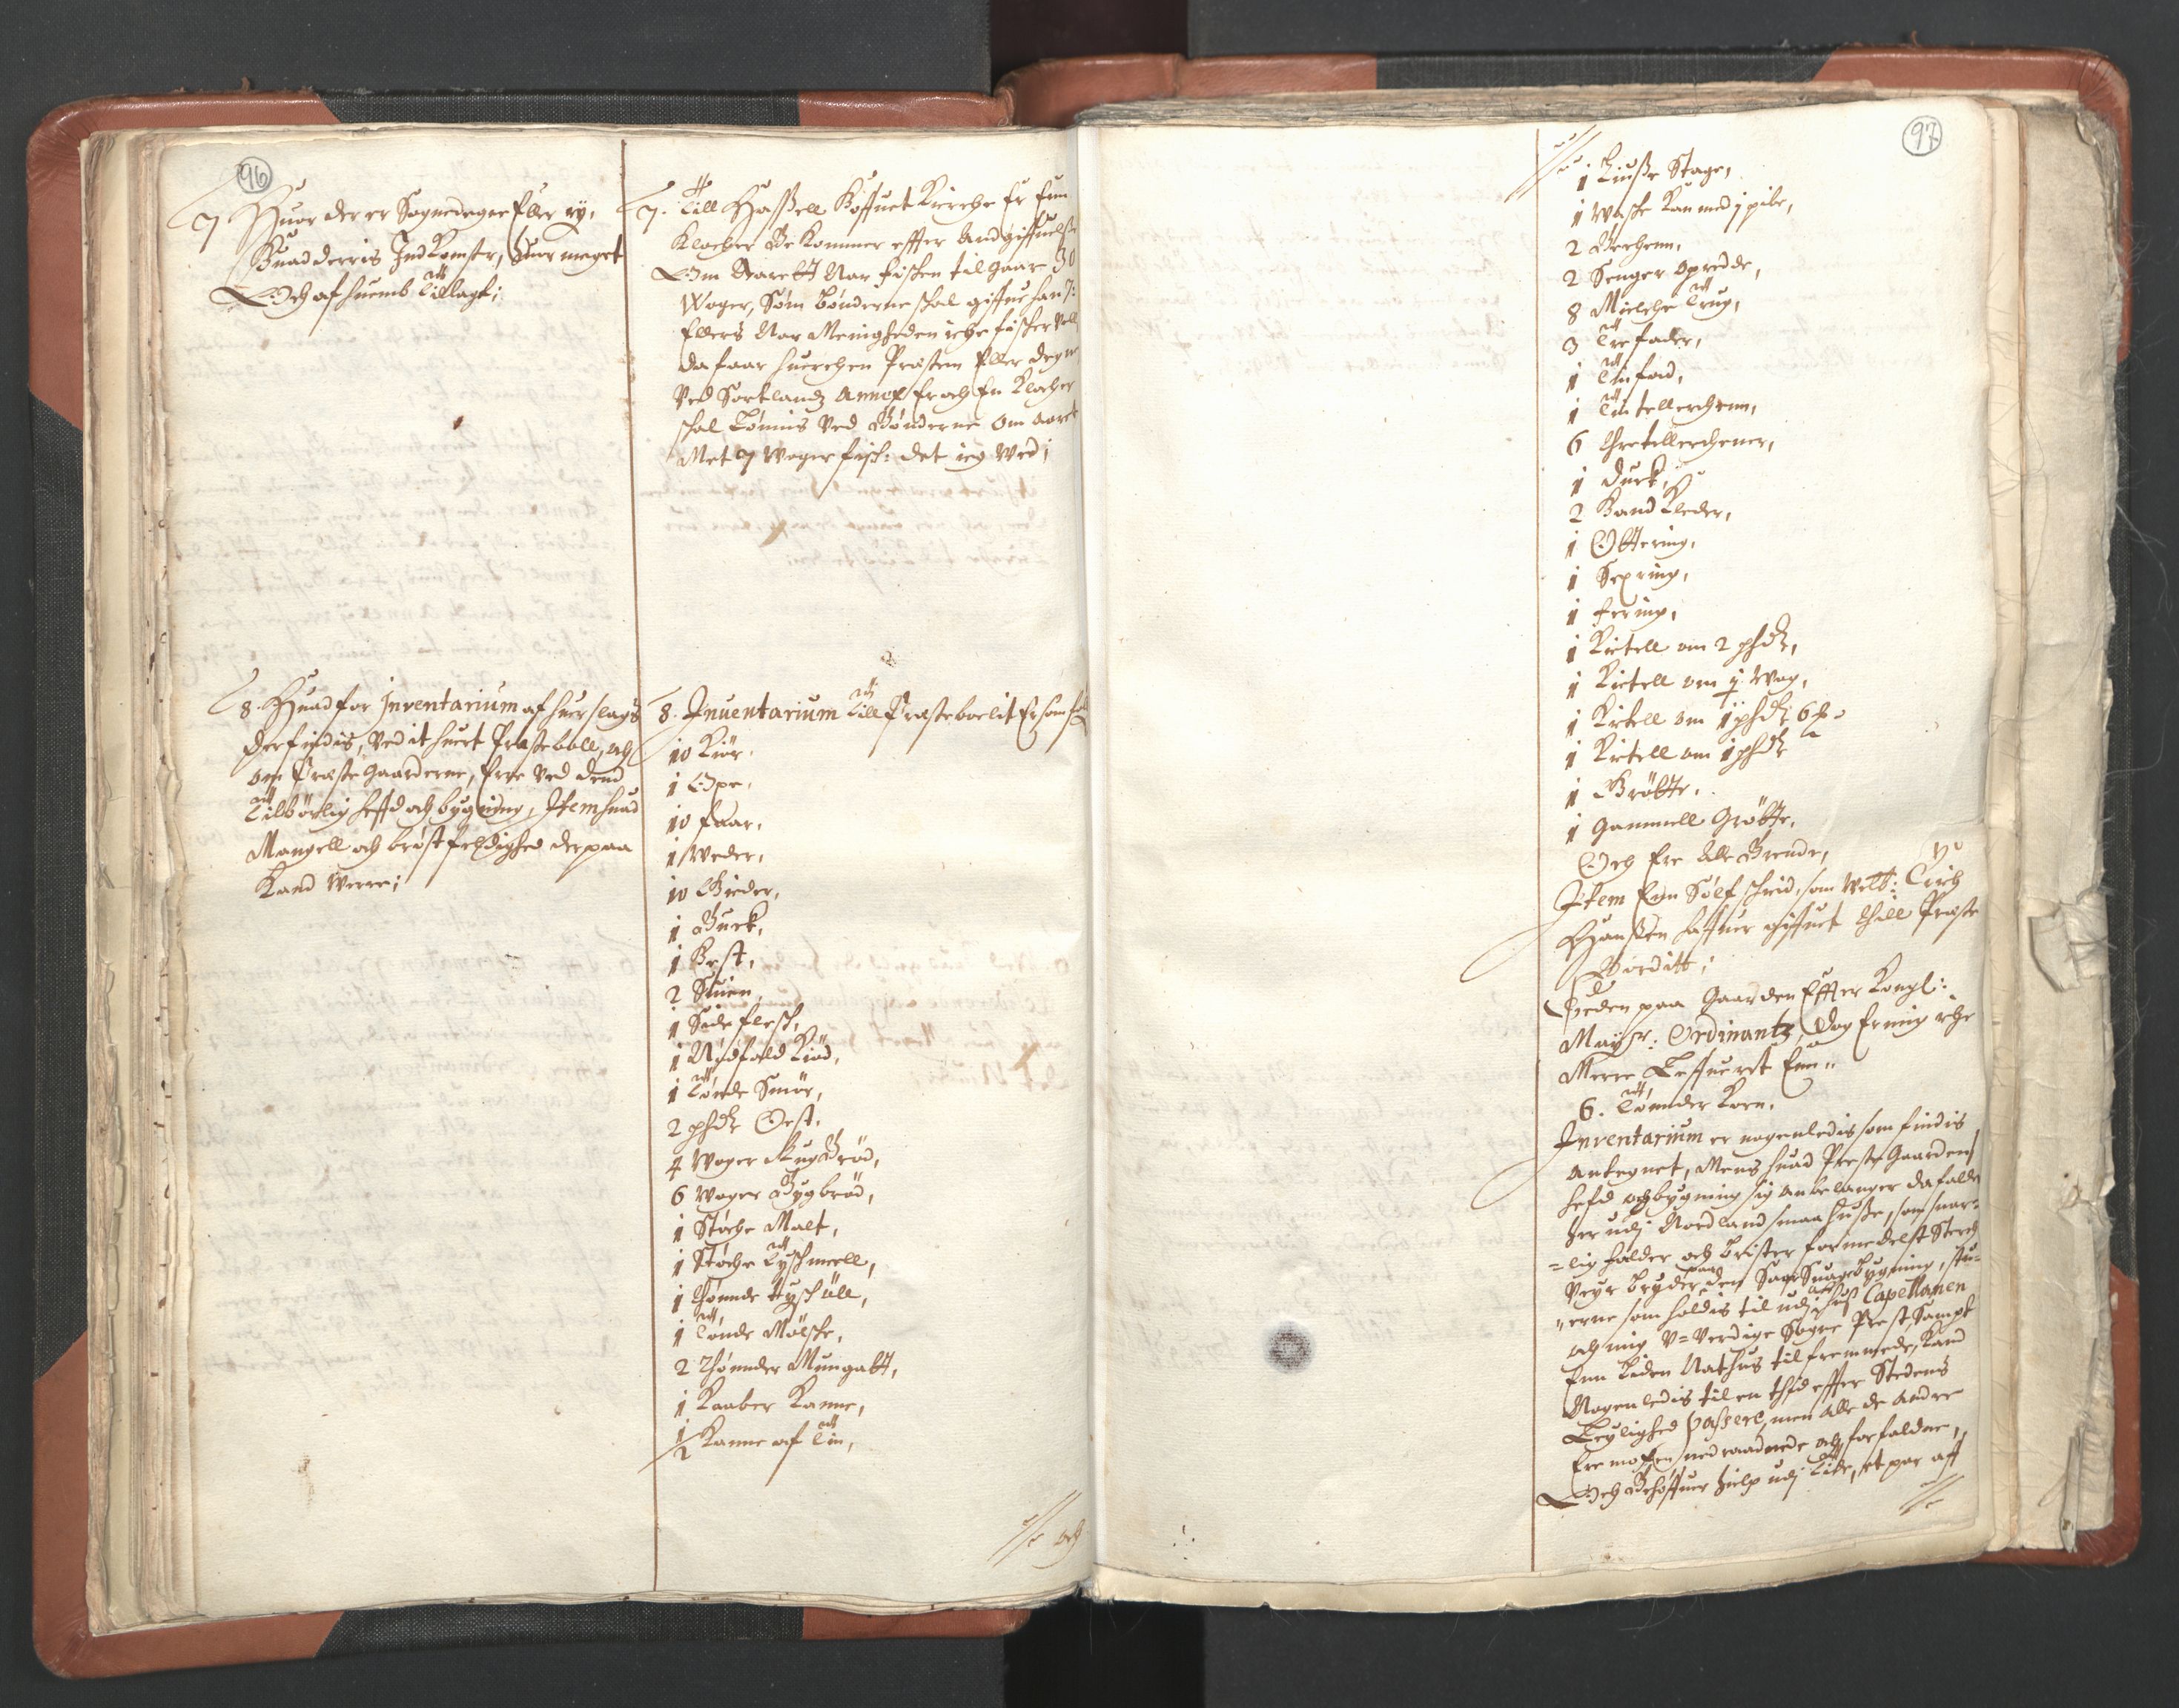 RA, Vicar's Census 1664-1666, no. 36: Lofoten and Vesterålen deanery, Senja deanery and Troms deanery, 1664-1666, p. 96-97